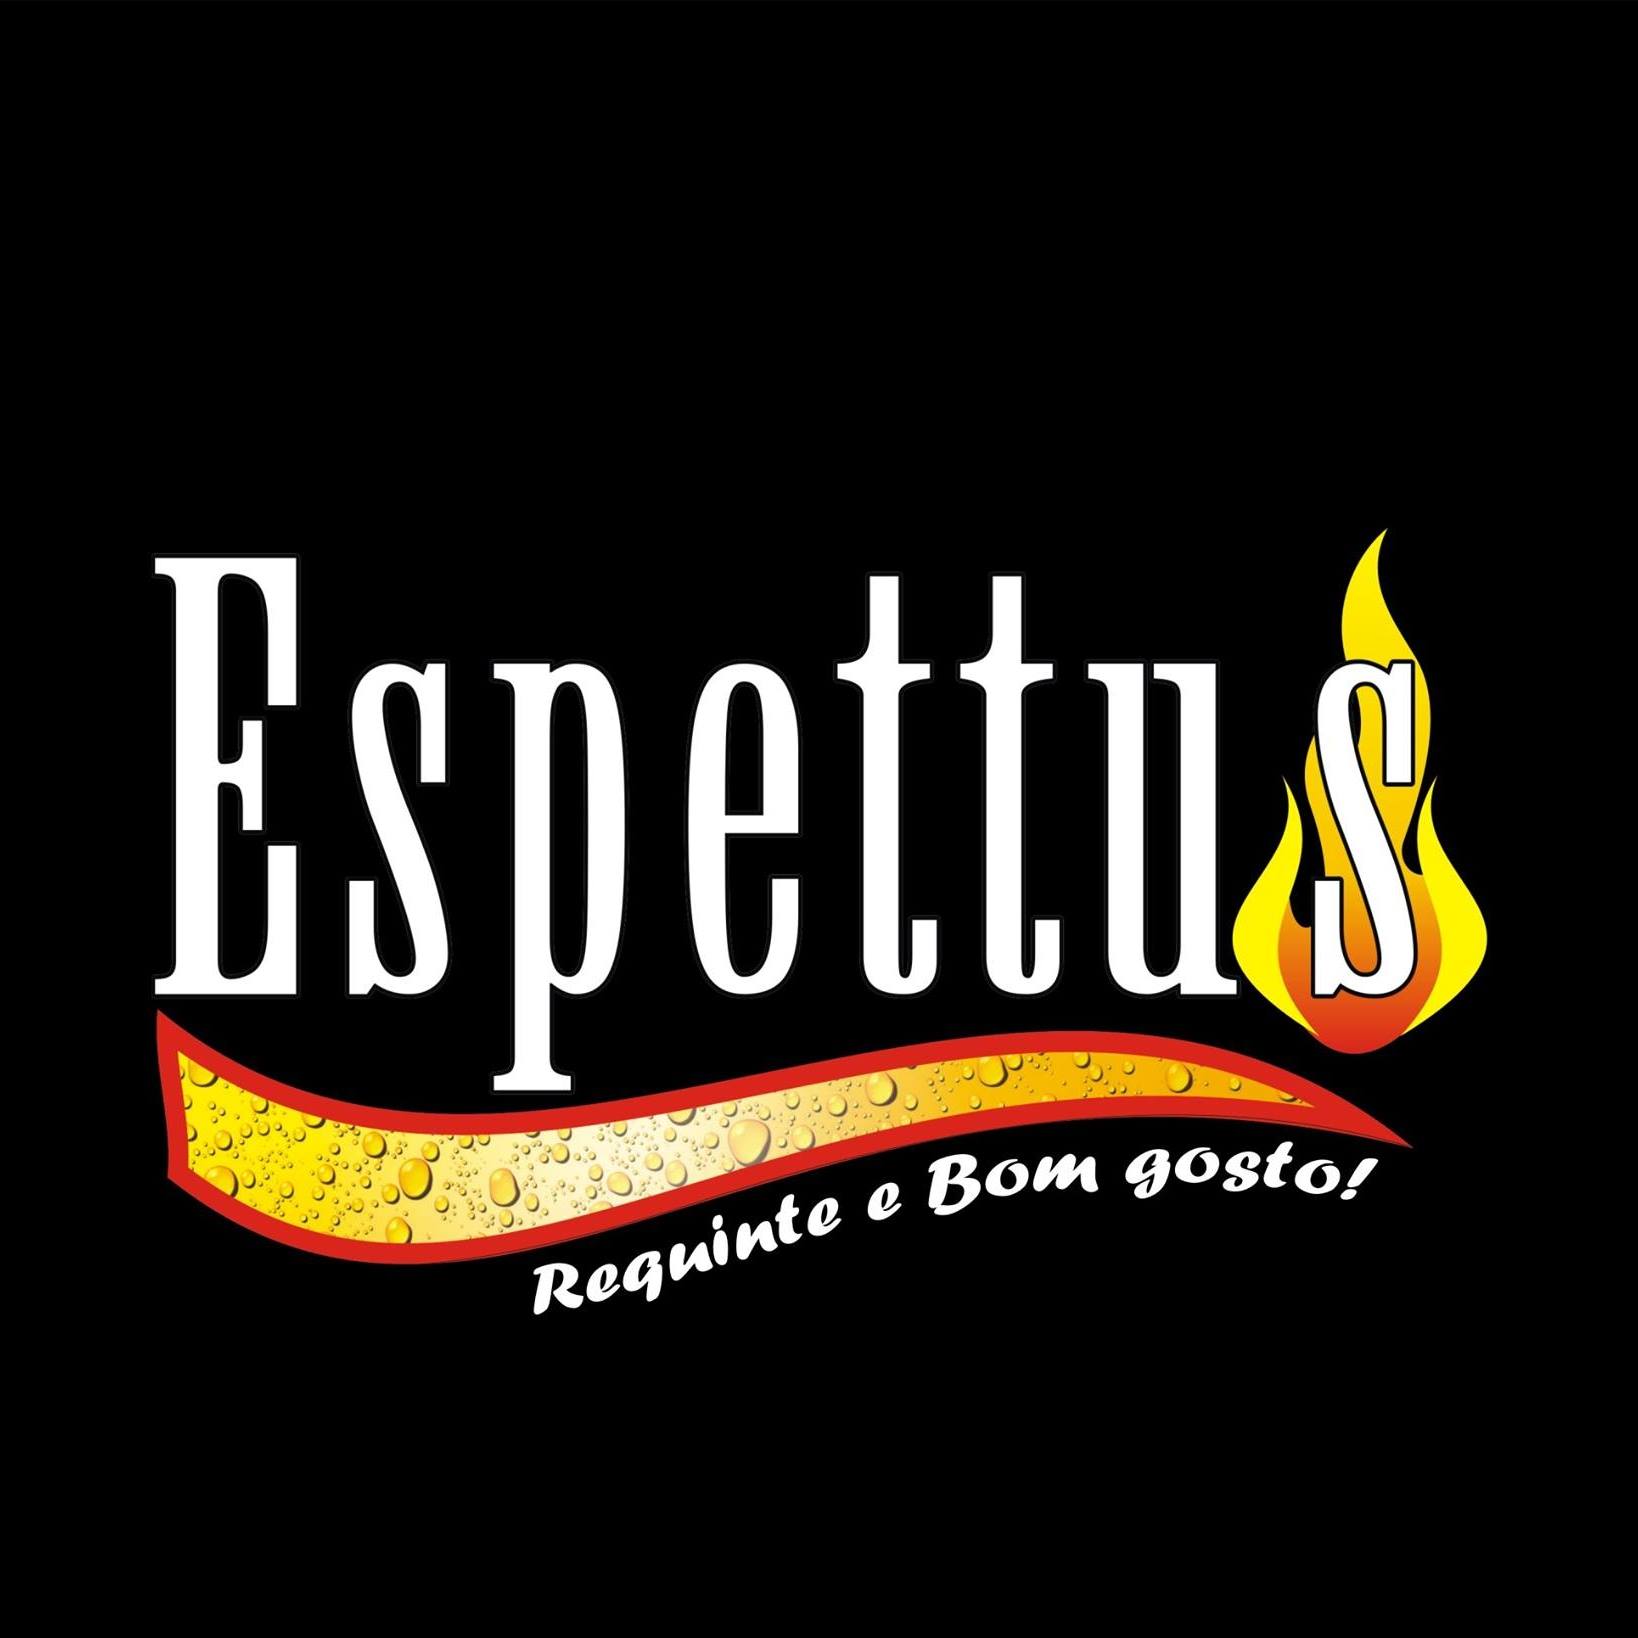 Espettus Bar